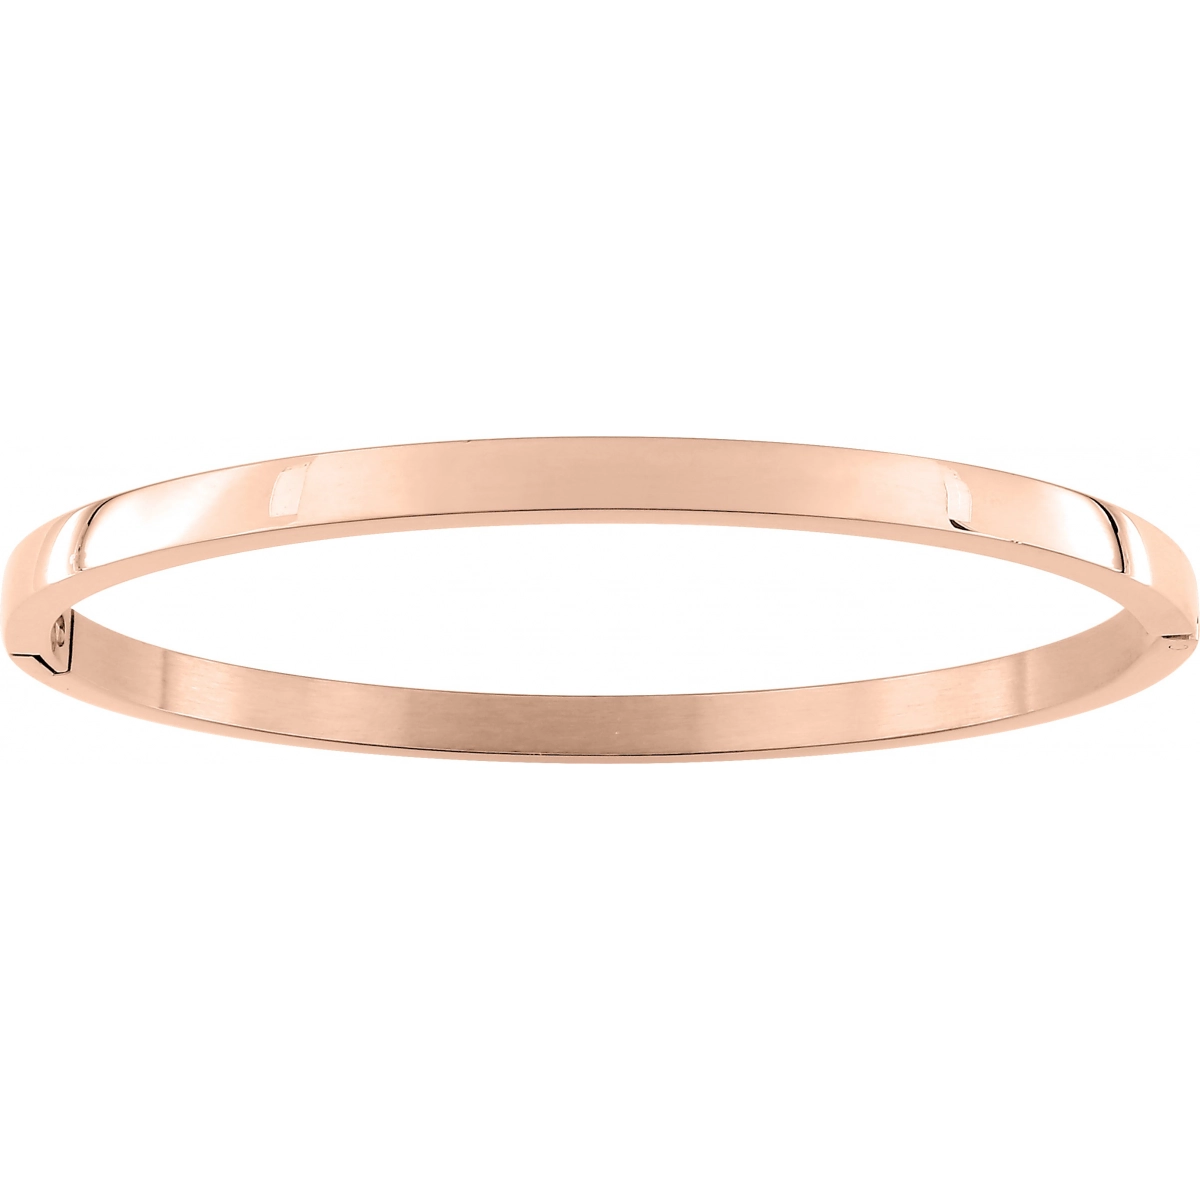 Bracelet pink colored st.Steel Lua Blanca  556047 